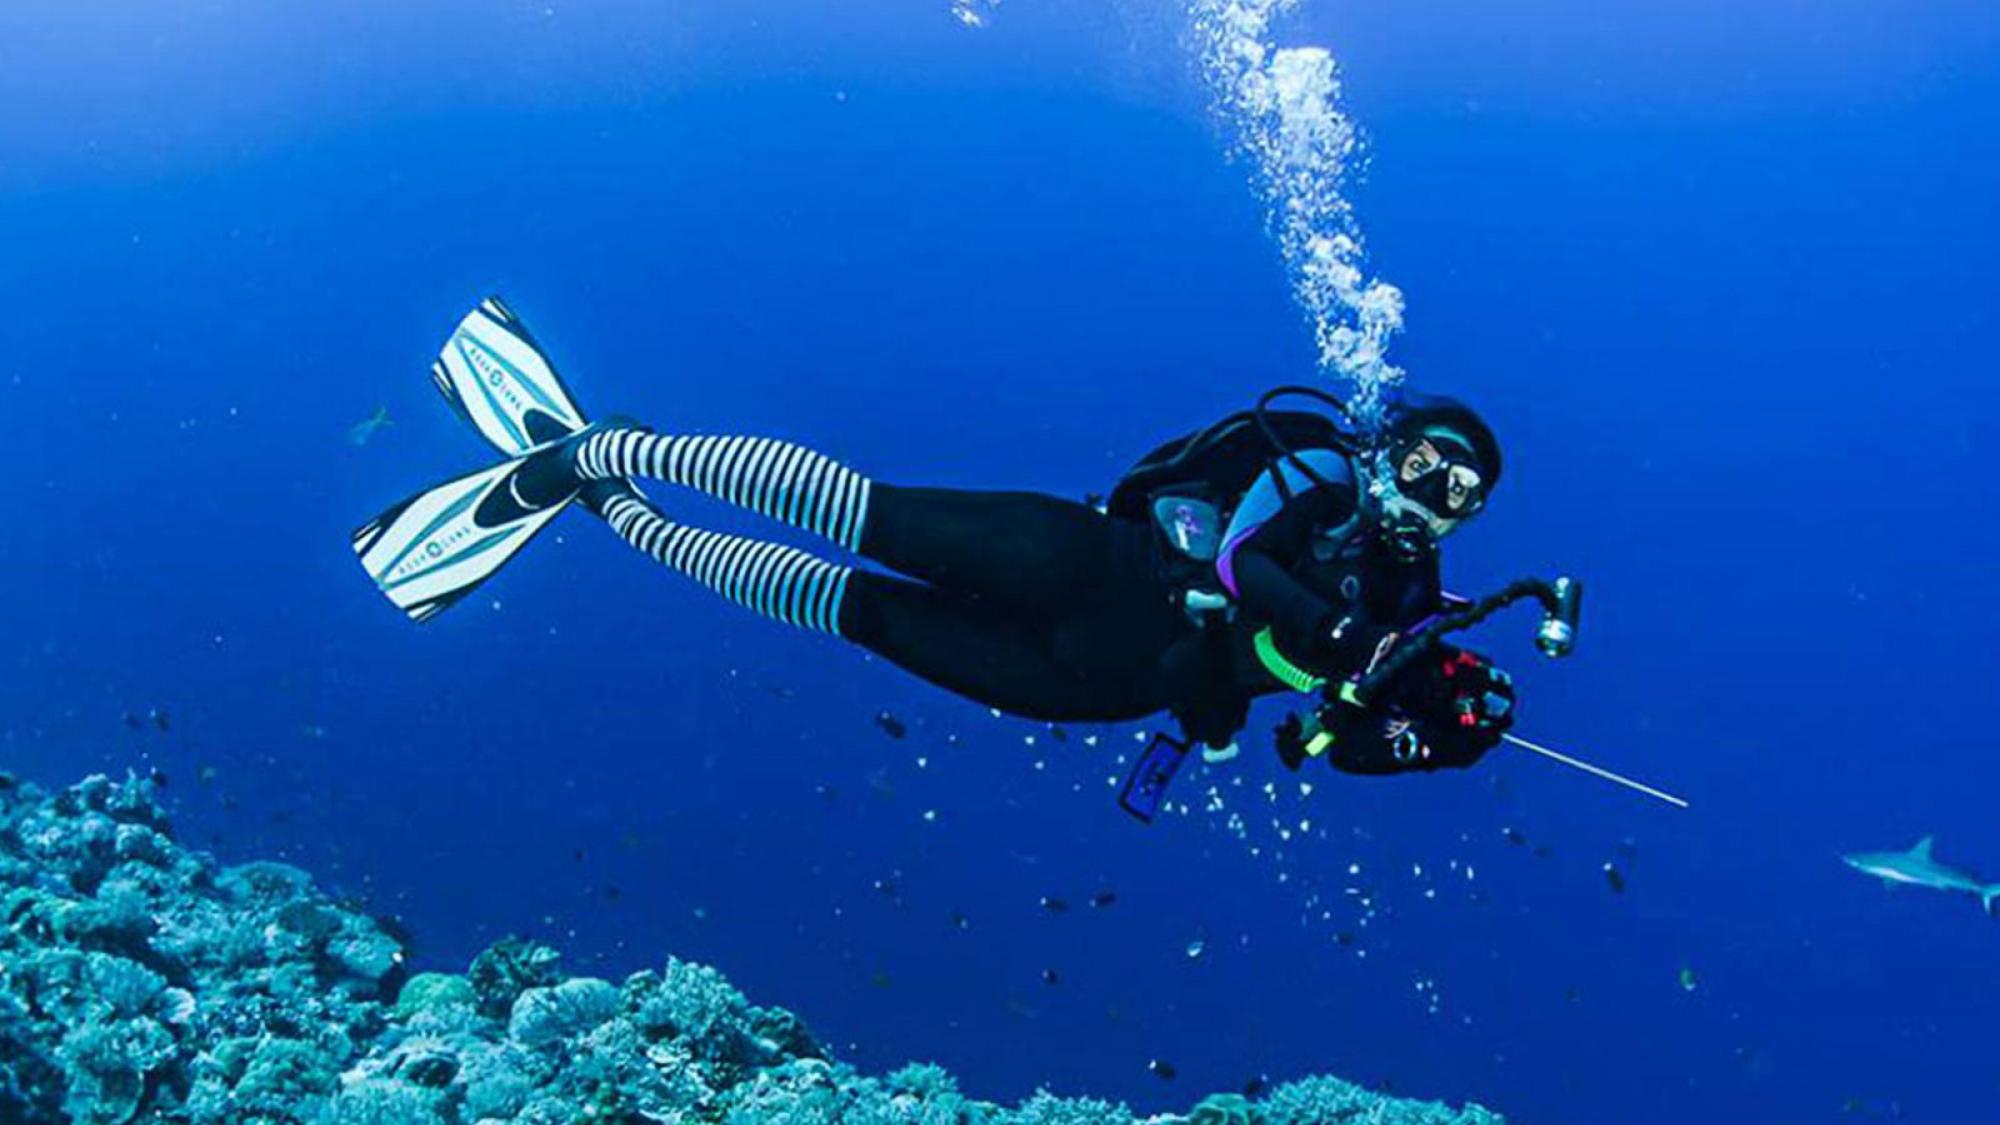 spain, best diving destinations for women